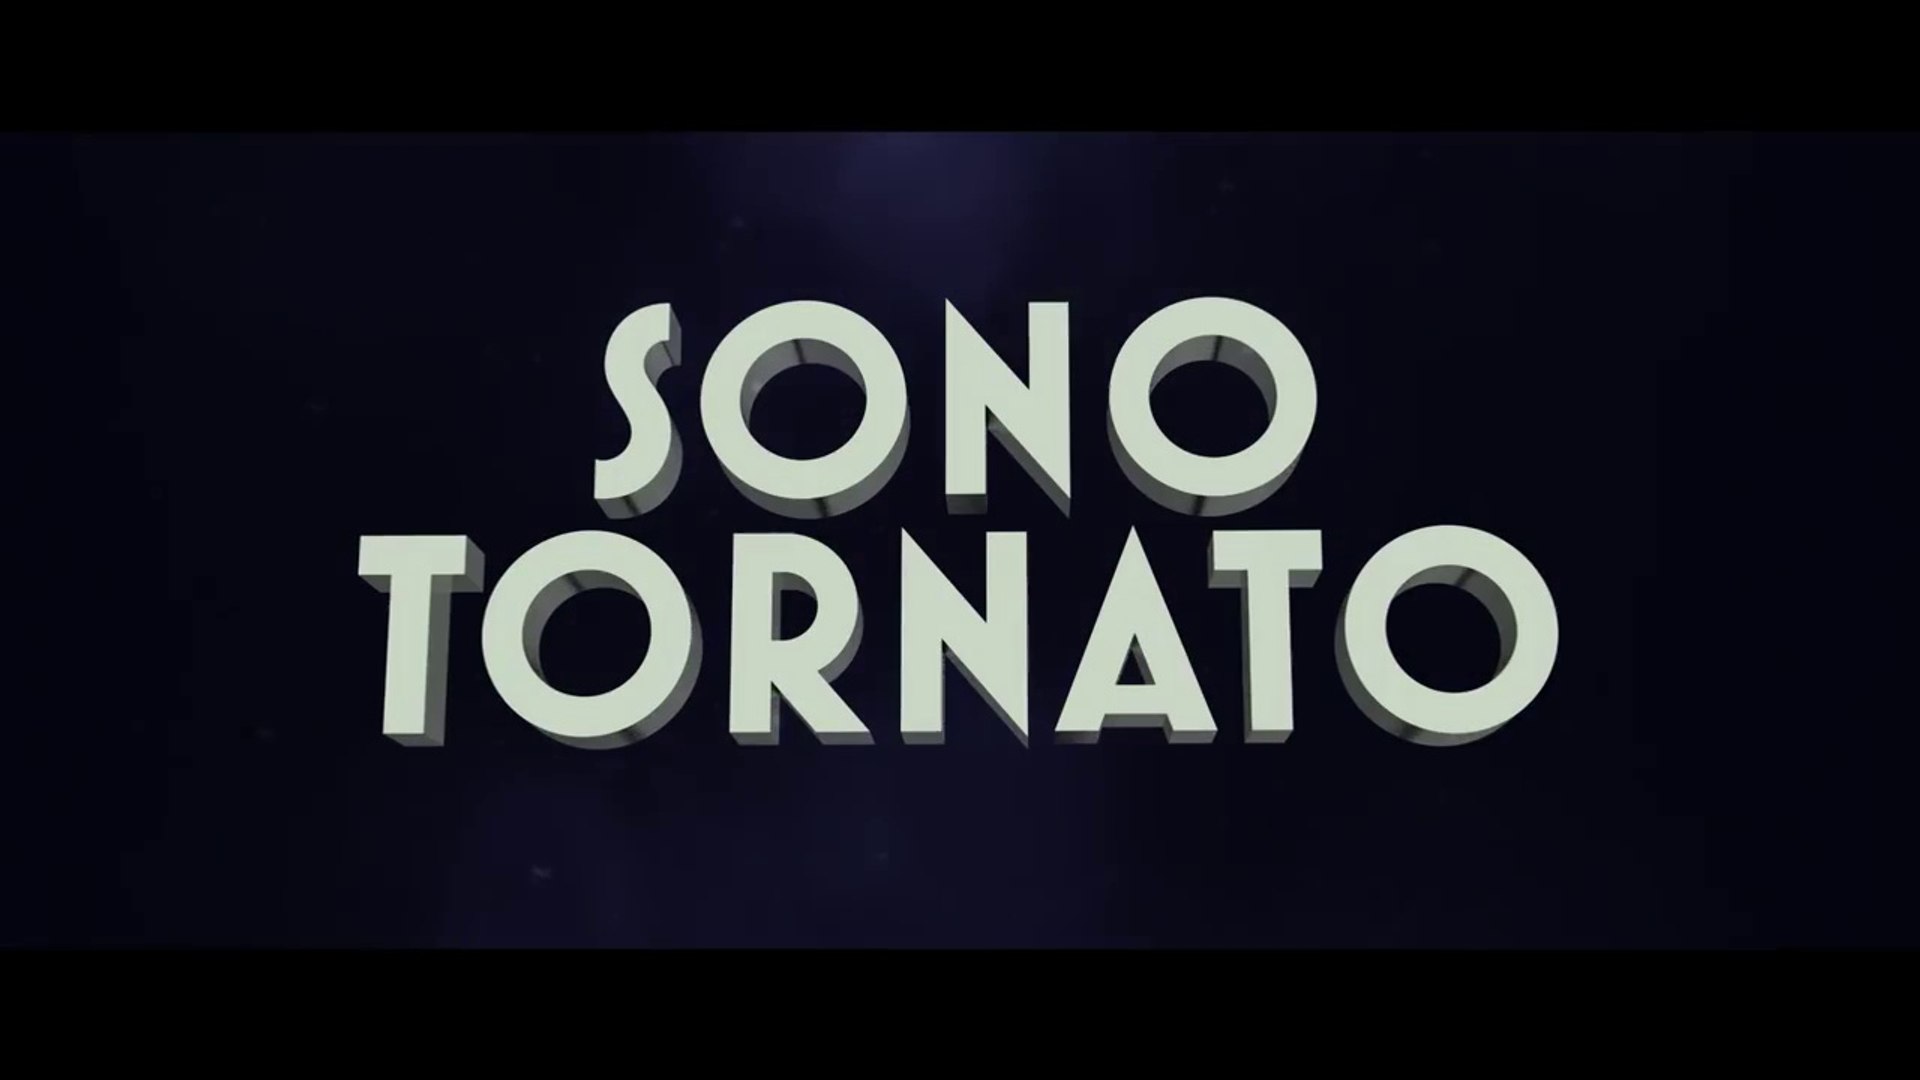 udvikle sandaler Mus Sono Tornato (2018) Trailer #1 - video Dailymotion